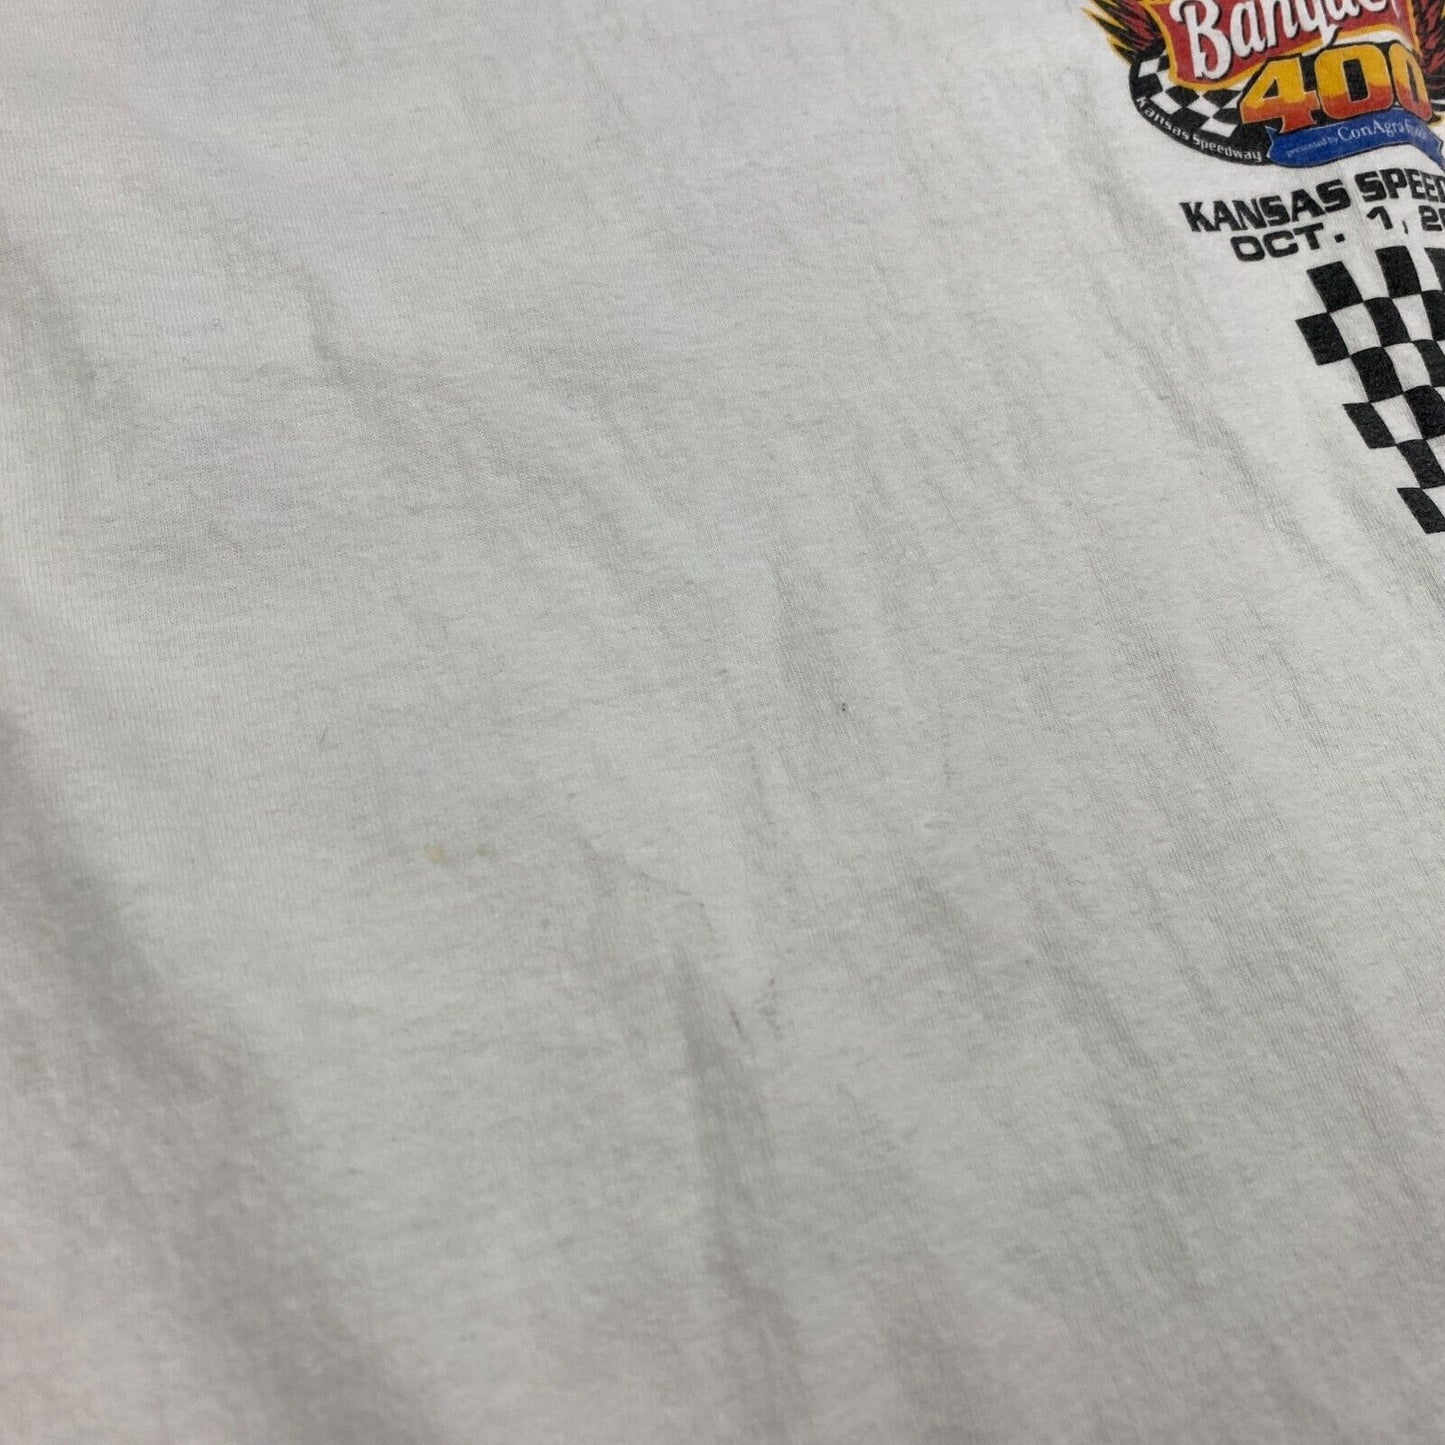 VINTAGE Nascar Kansas Speedway Racing White T-Shirt sz XXL Men